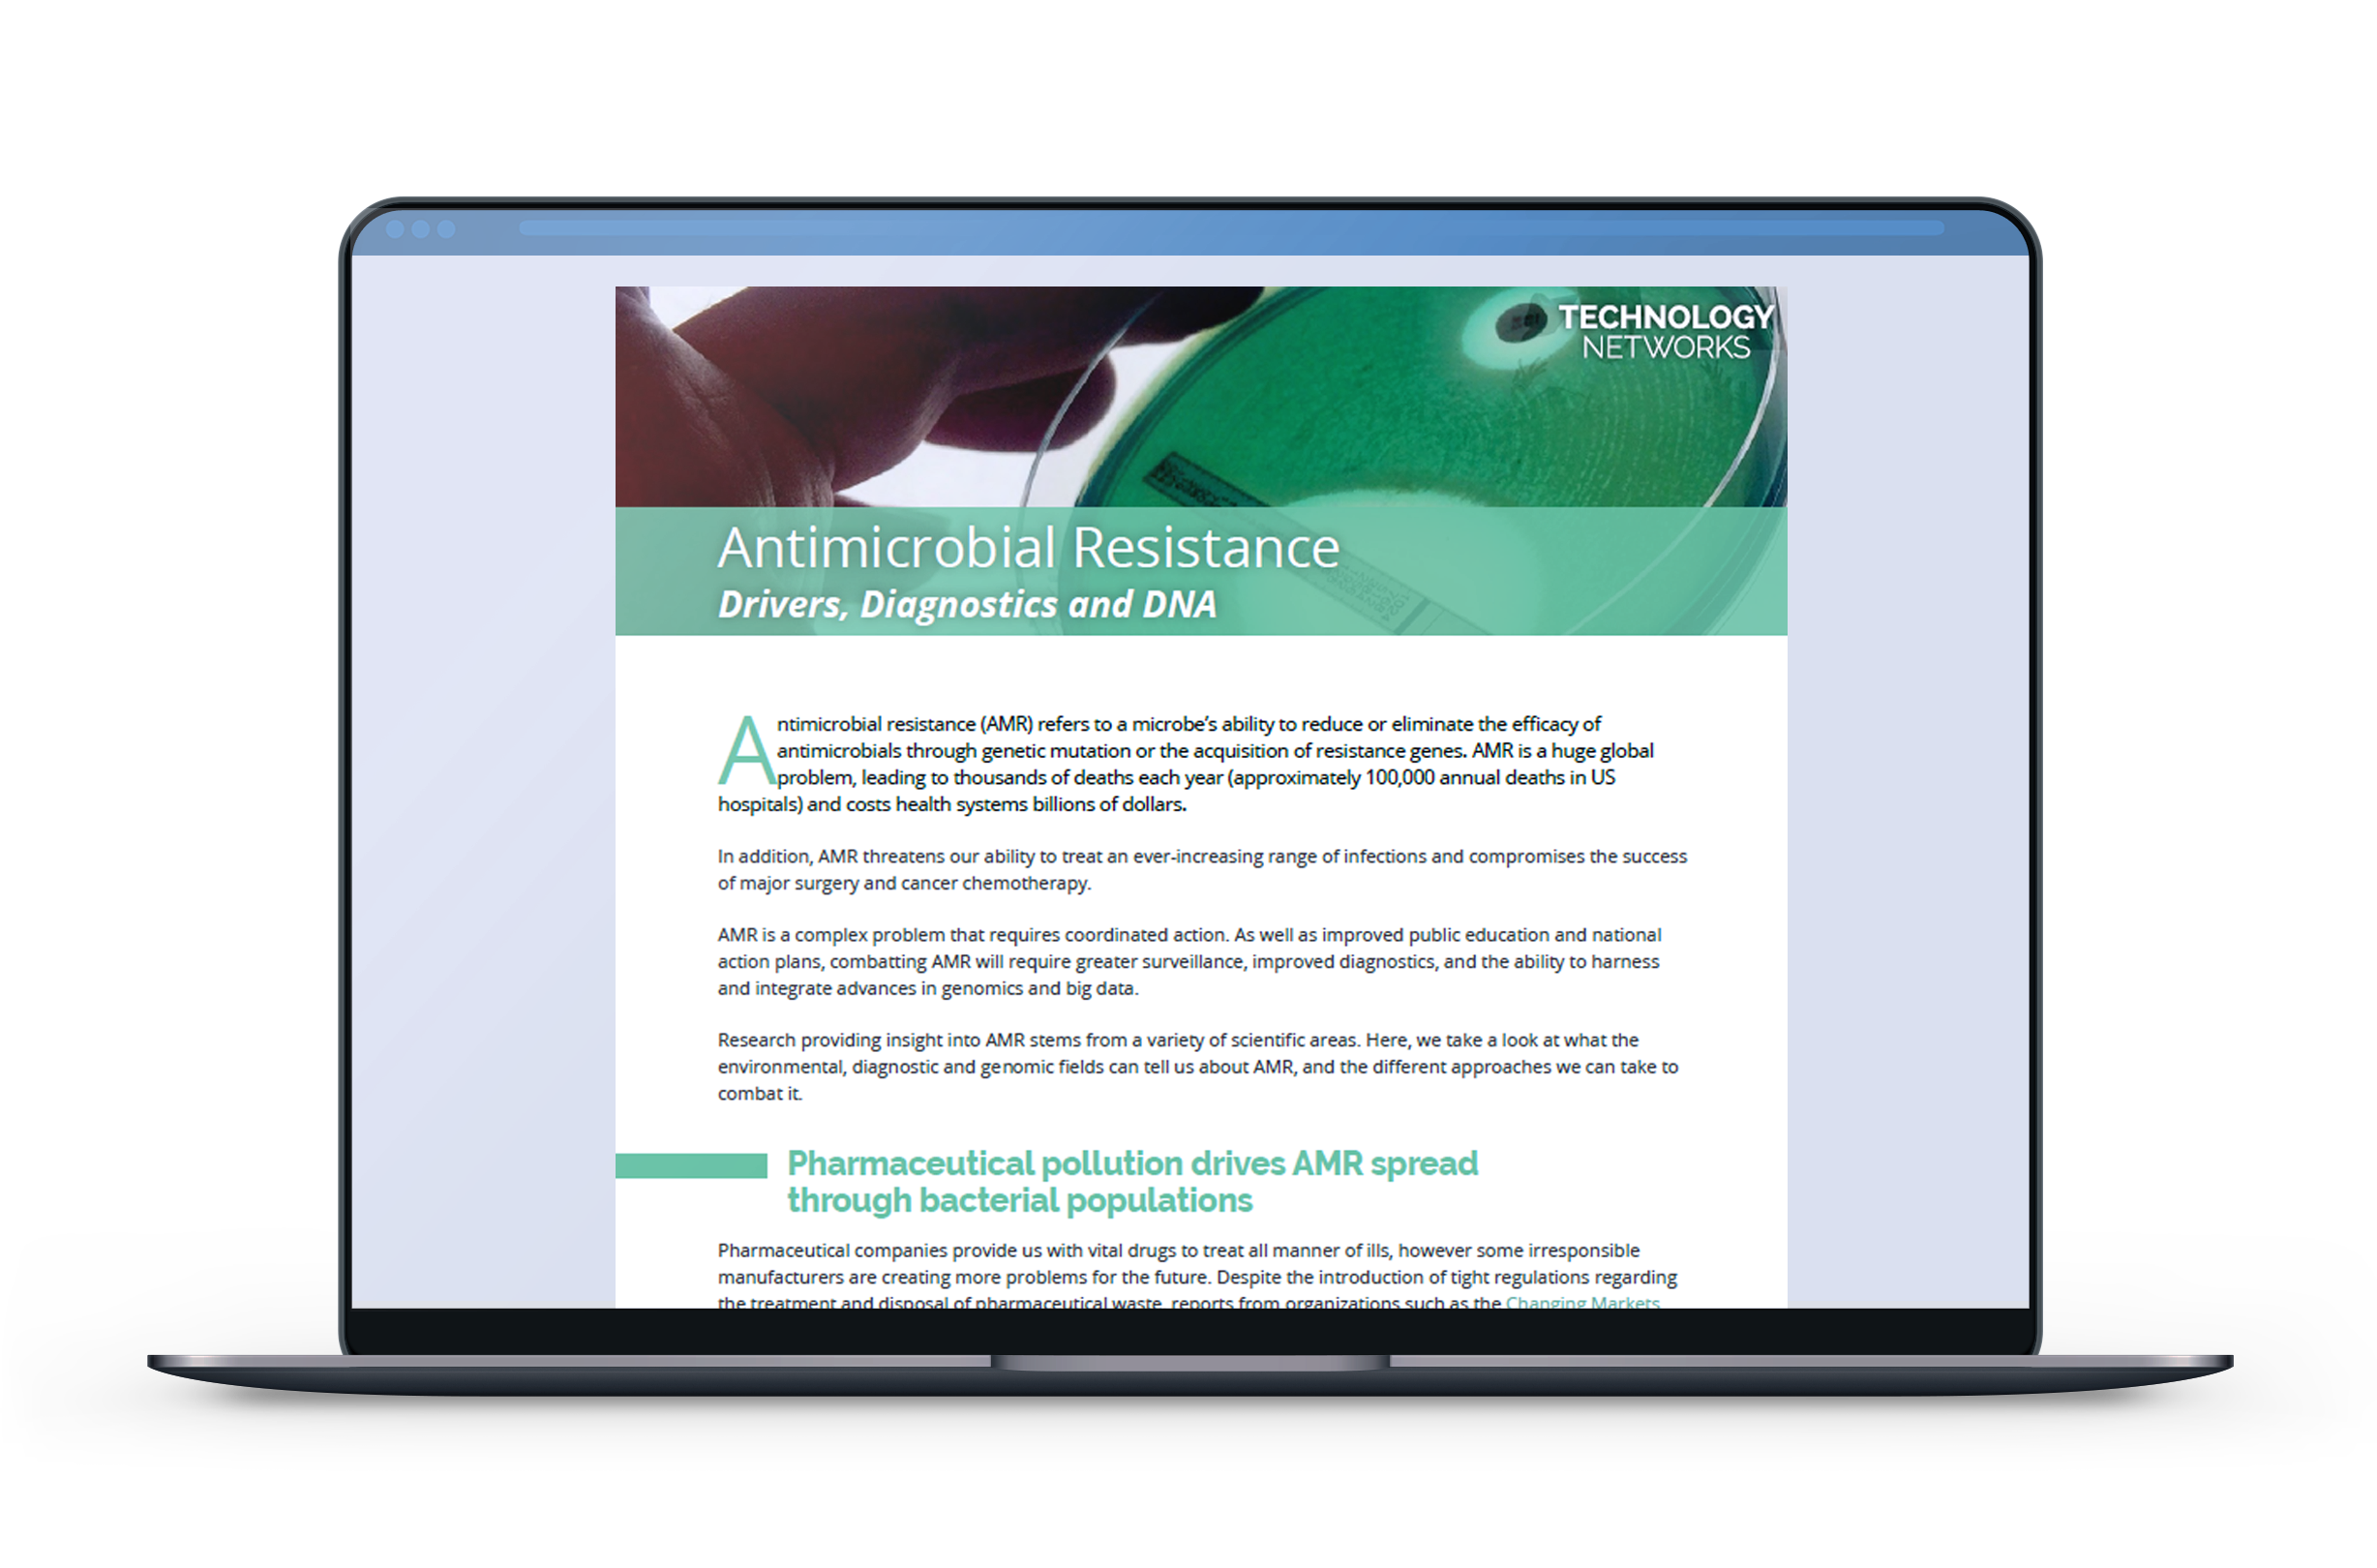 AntimicrobialResistance